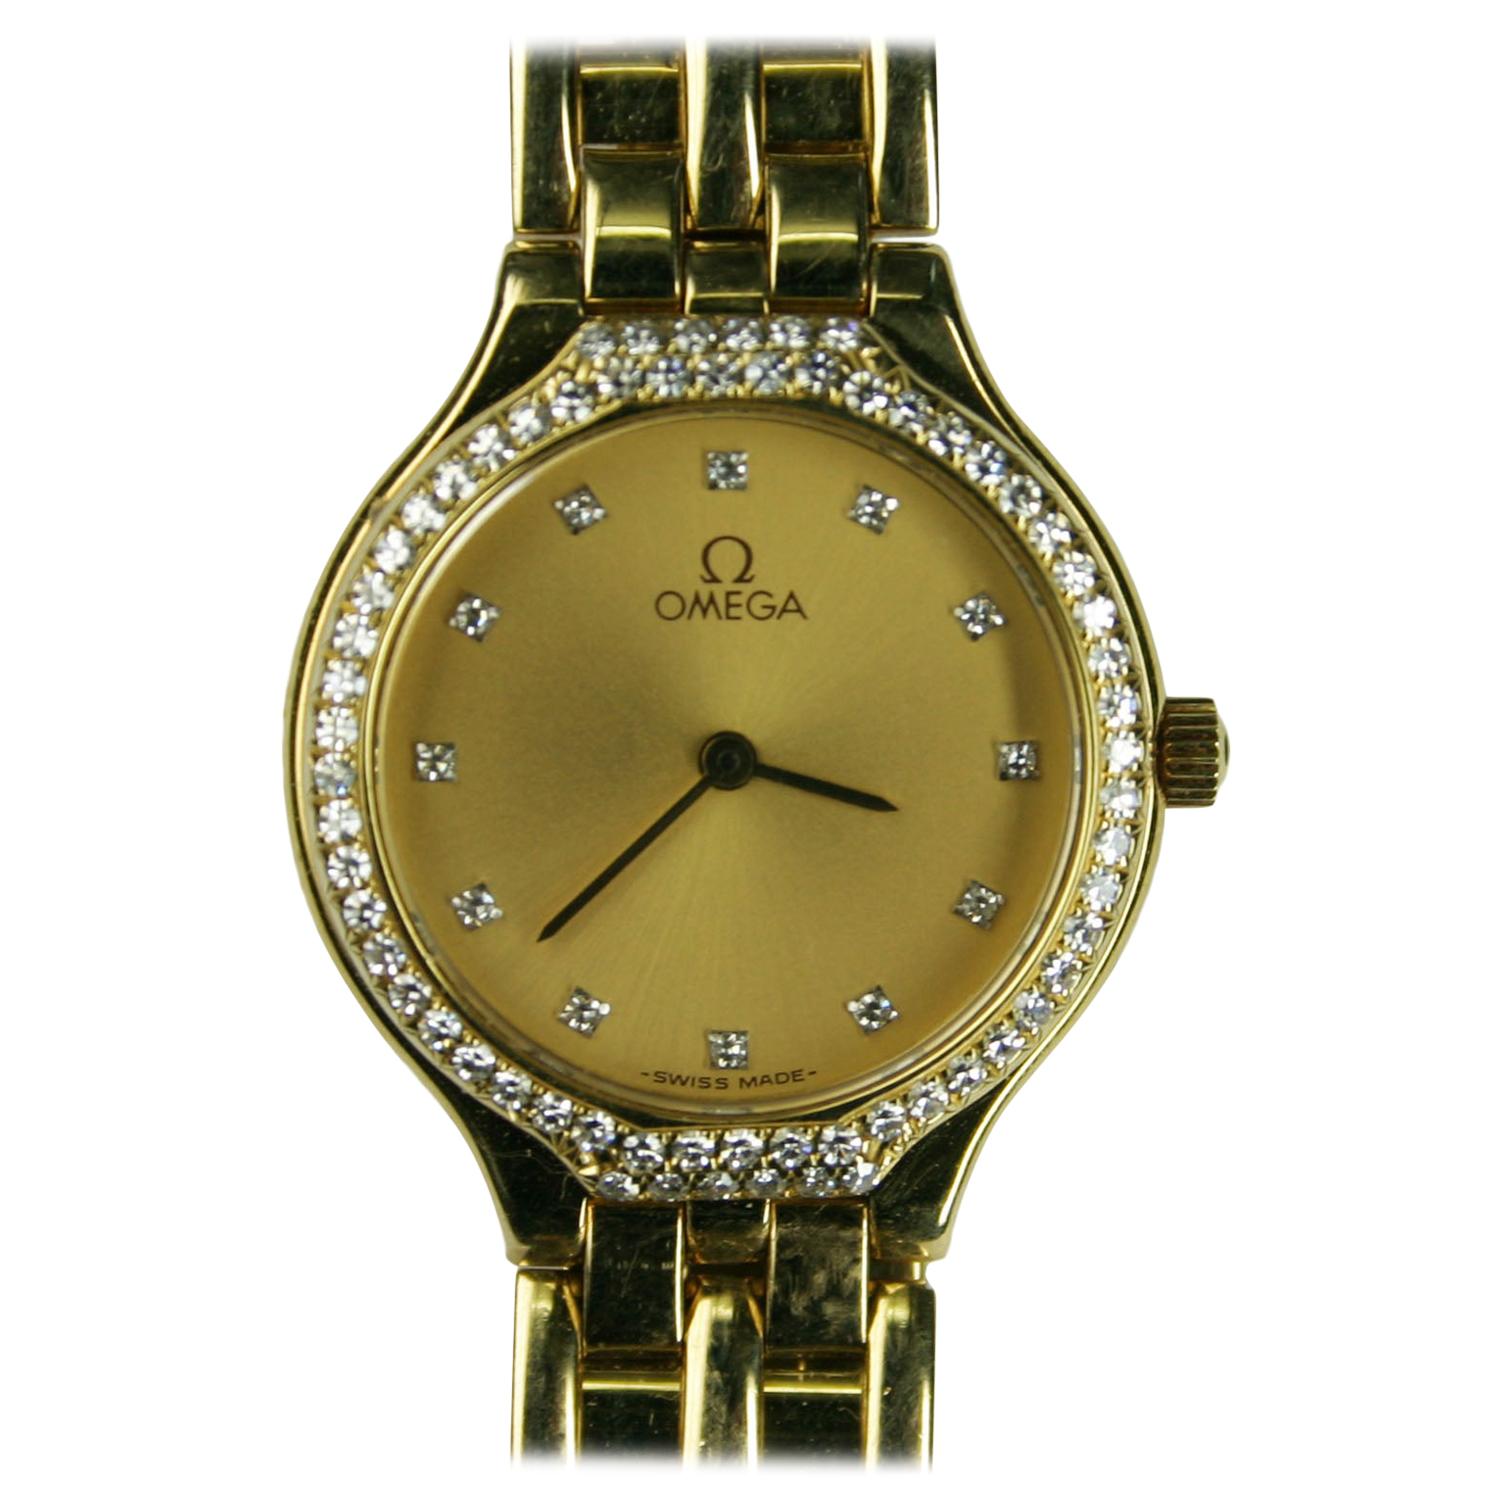 18 Karat Yellow Gold Omega Womens Wristwatch Fits Wrist